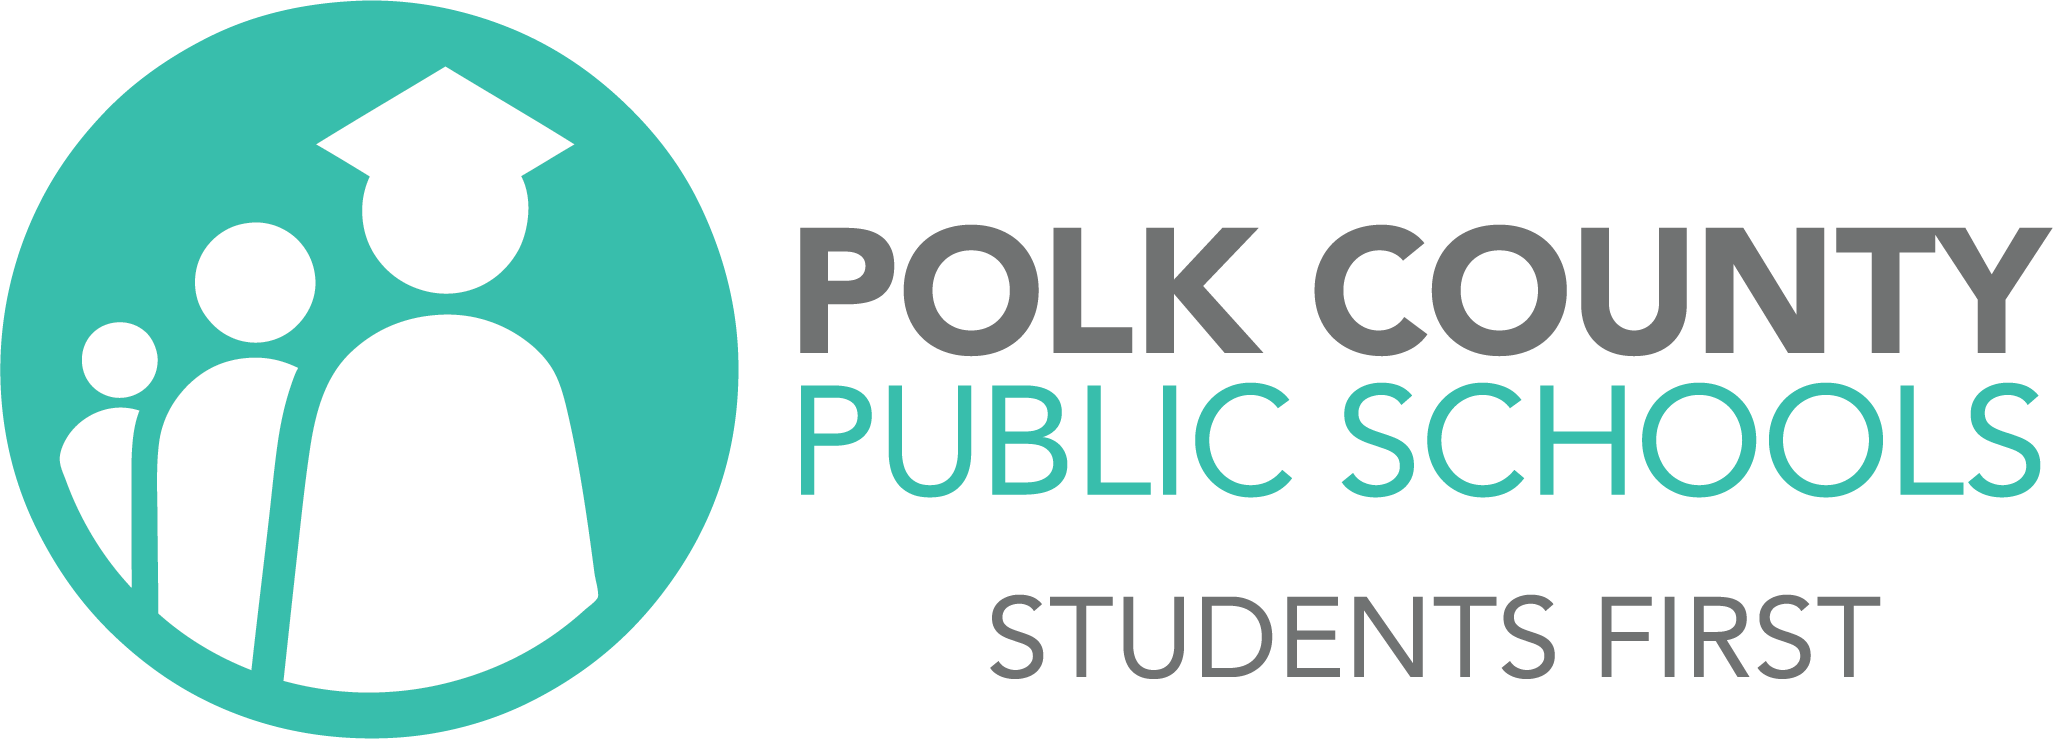 Polk County Public Schools (PCPS) 